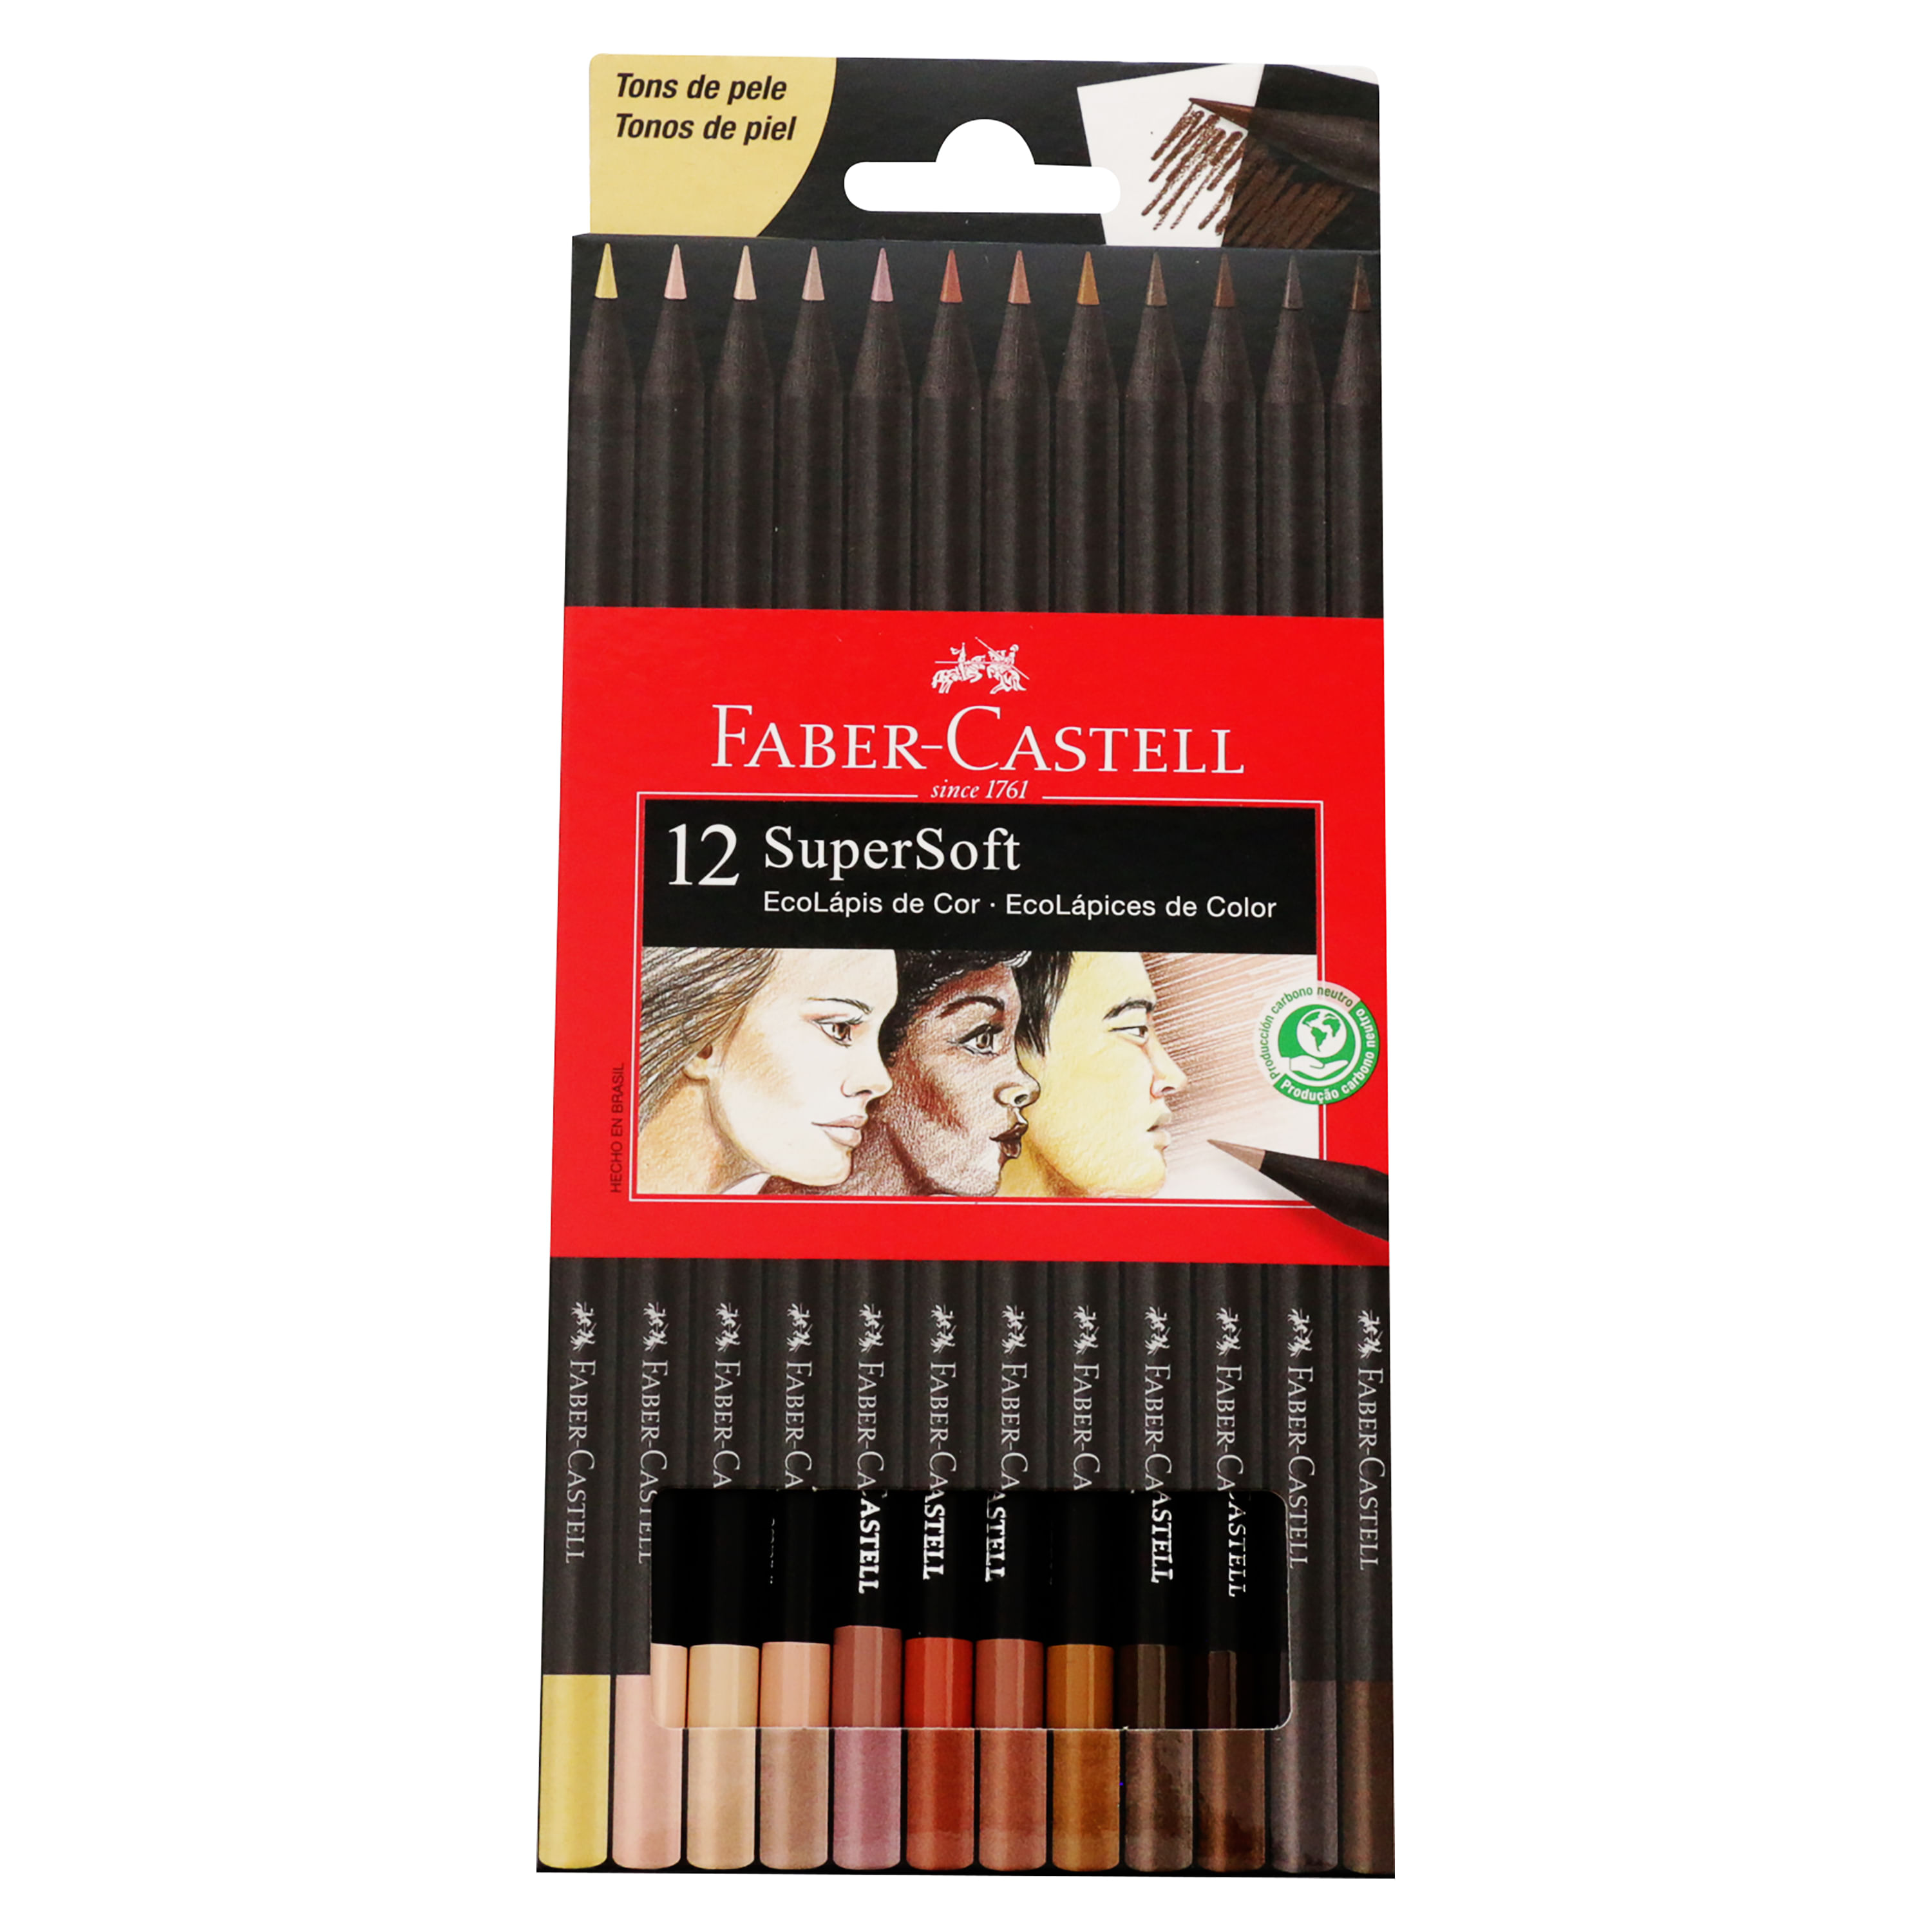 Comprar Lápiz De Color Faber Castell Supersoft Piel Caja 12 unidades, Walmart Costa Rica - Maxi Palí